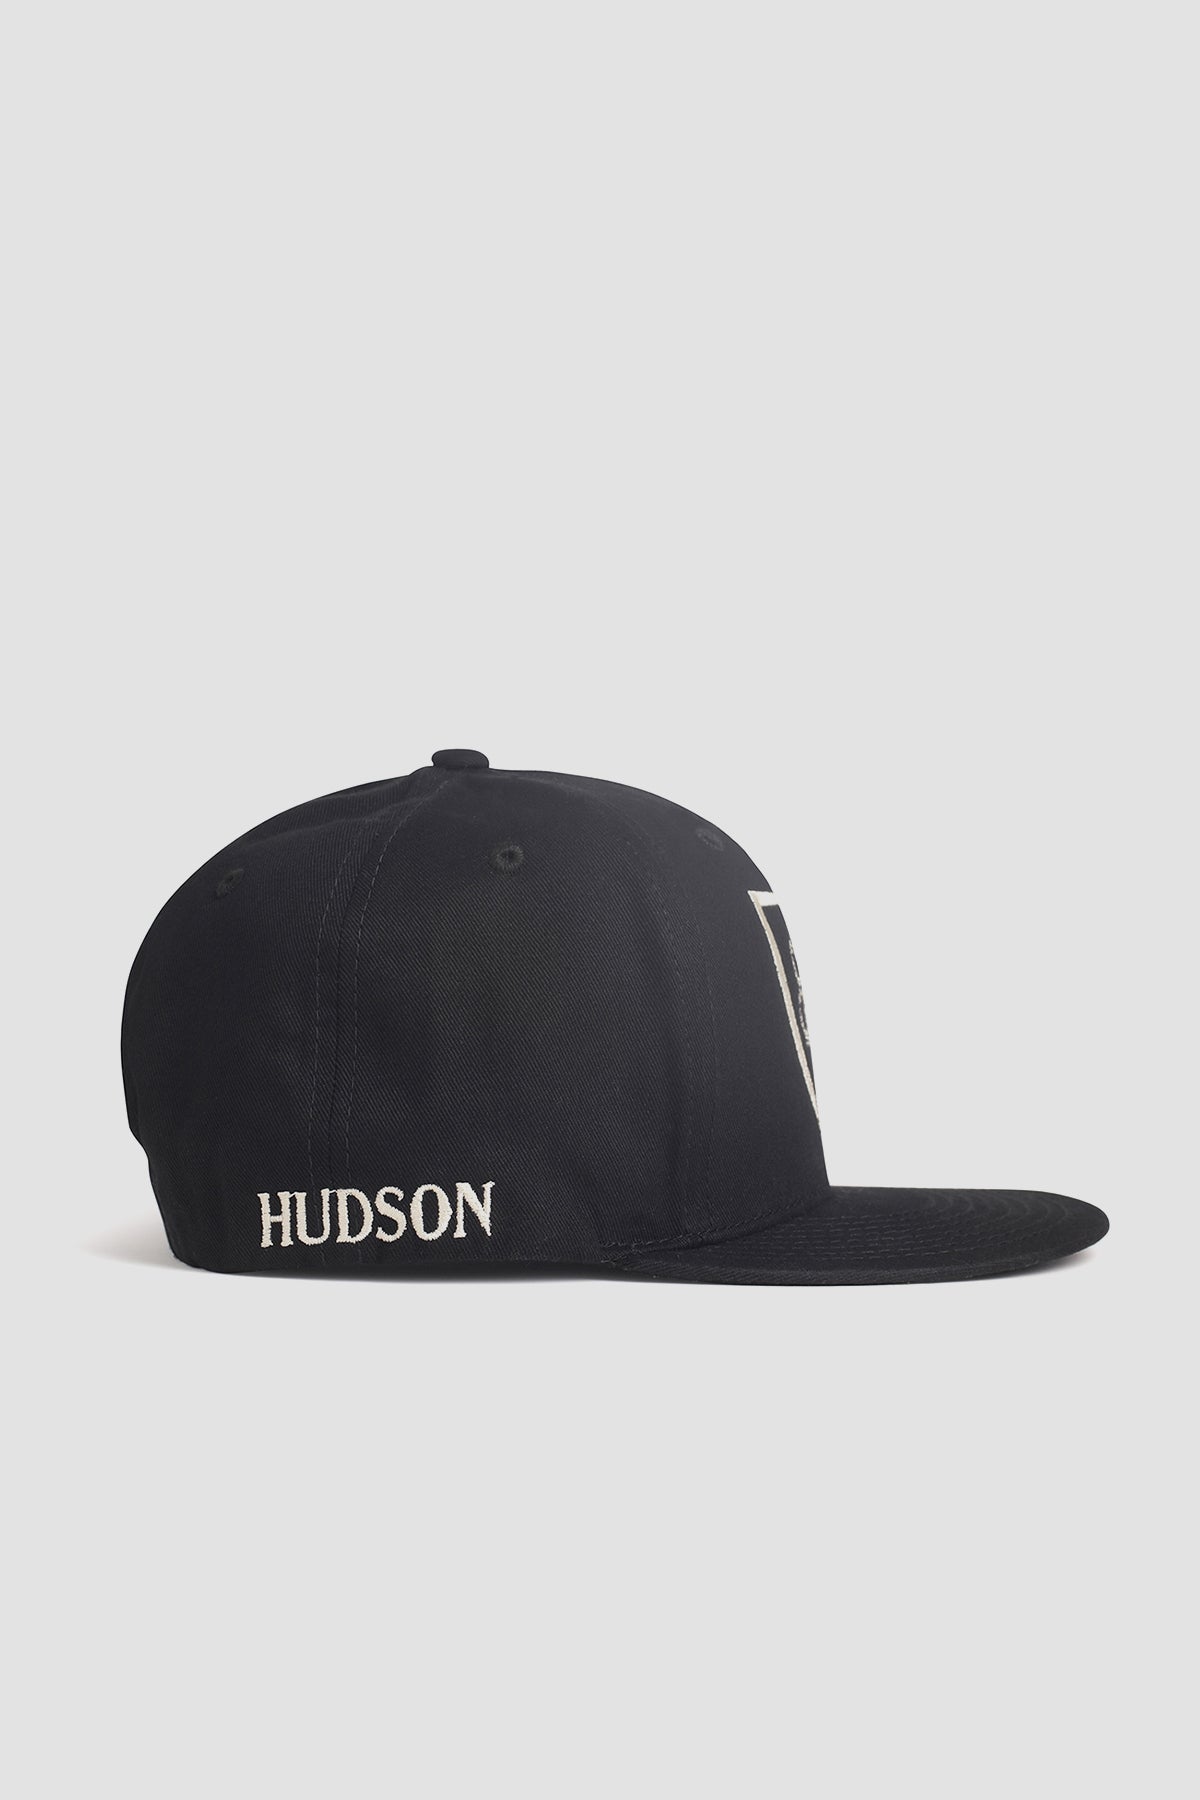 Hudson x Brandon Williams Hat